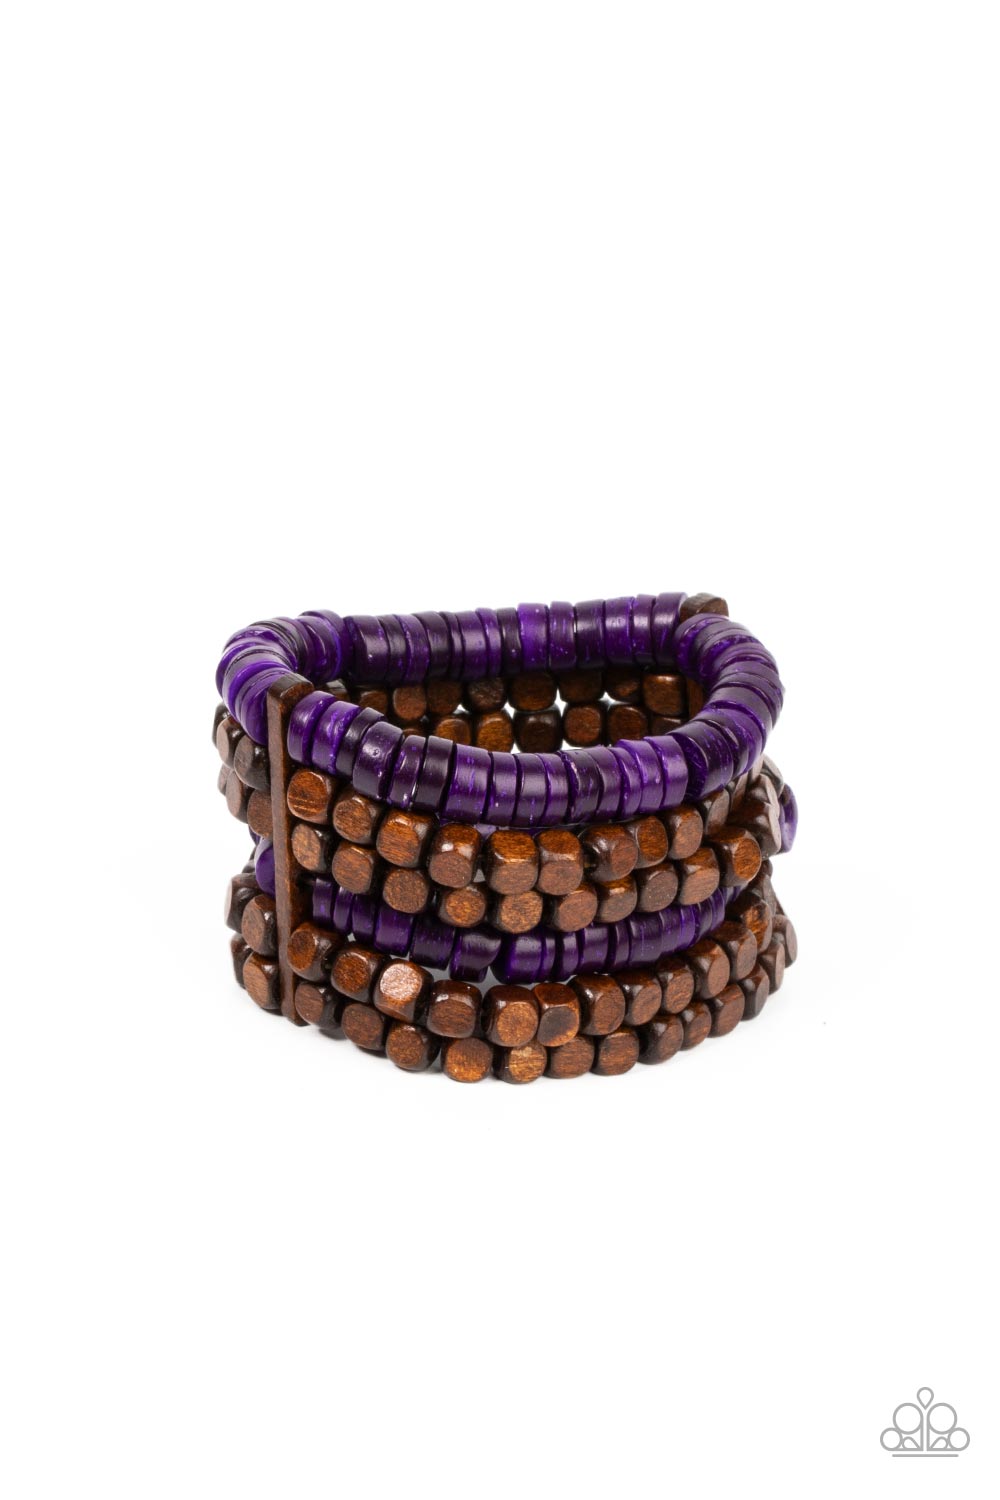 Fiji Fiesta Purple Wood Bracelet - Paparazzi Accessories- lightbox - CarasShop.com - $5 Jewelry by Cara Jewels